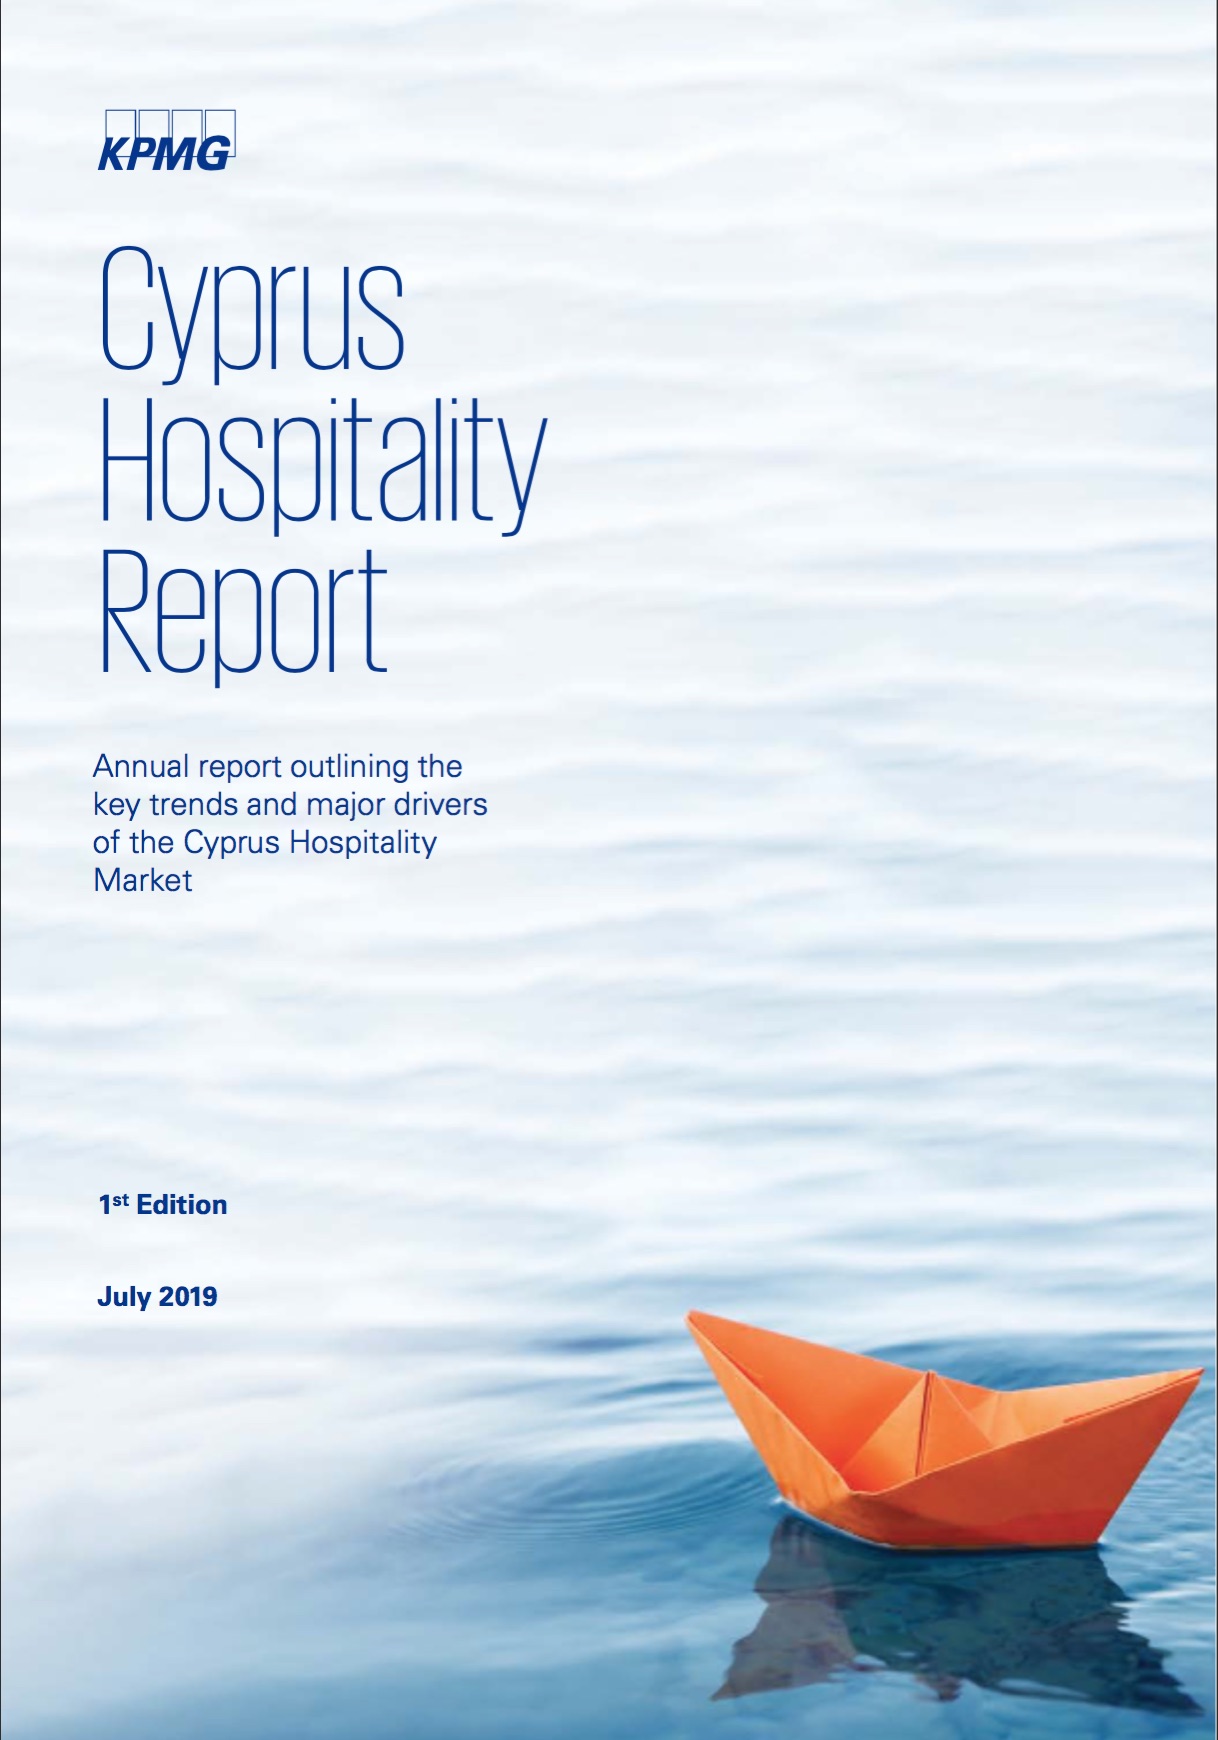 KPMG: Cyprus Hospitality Report - July 2019